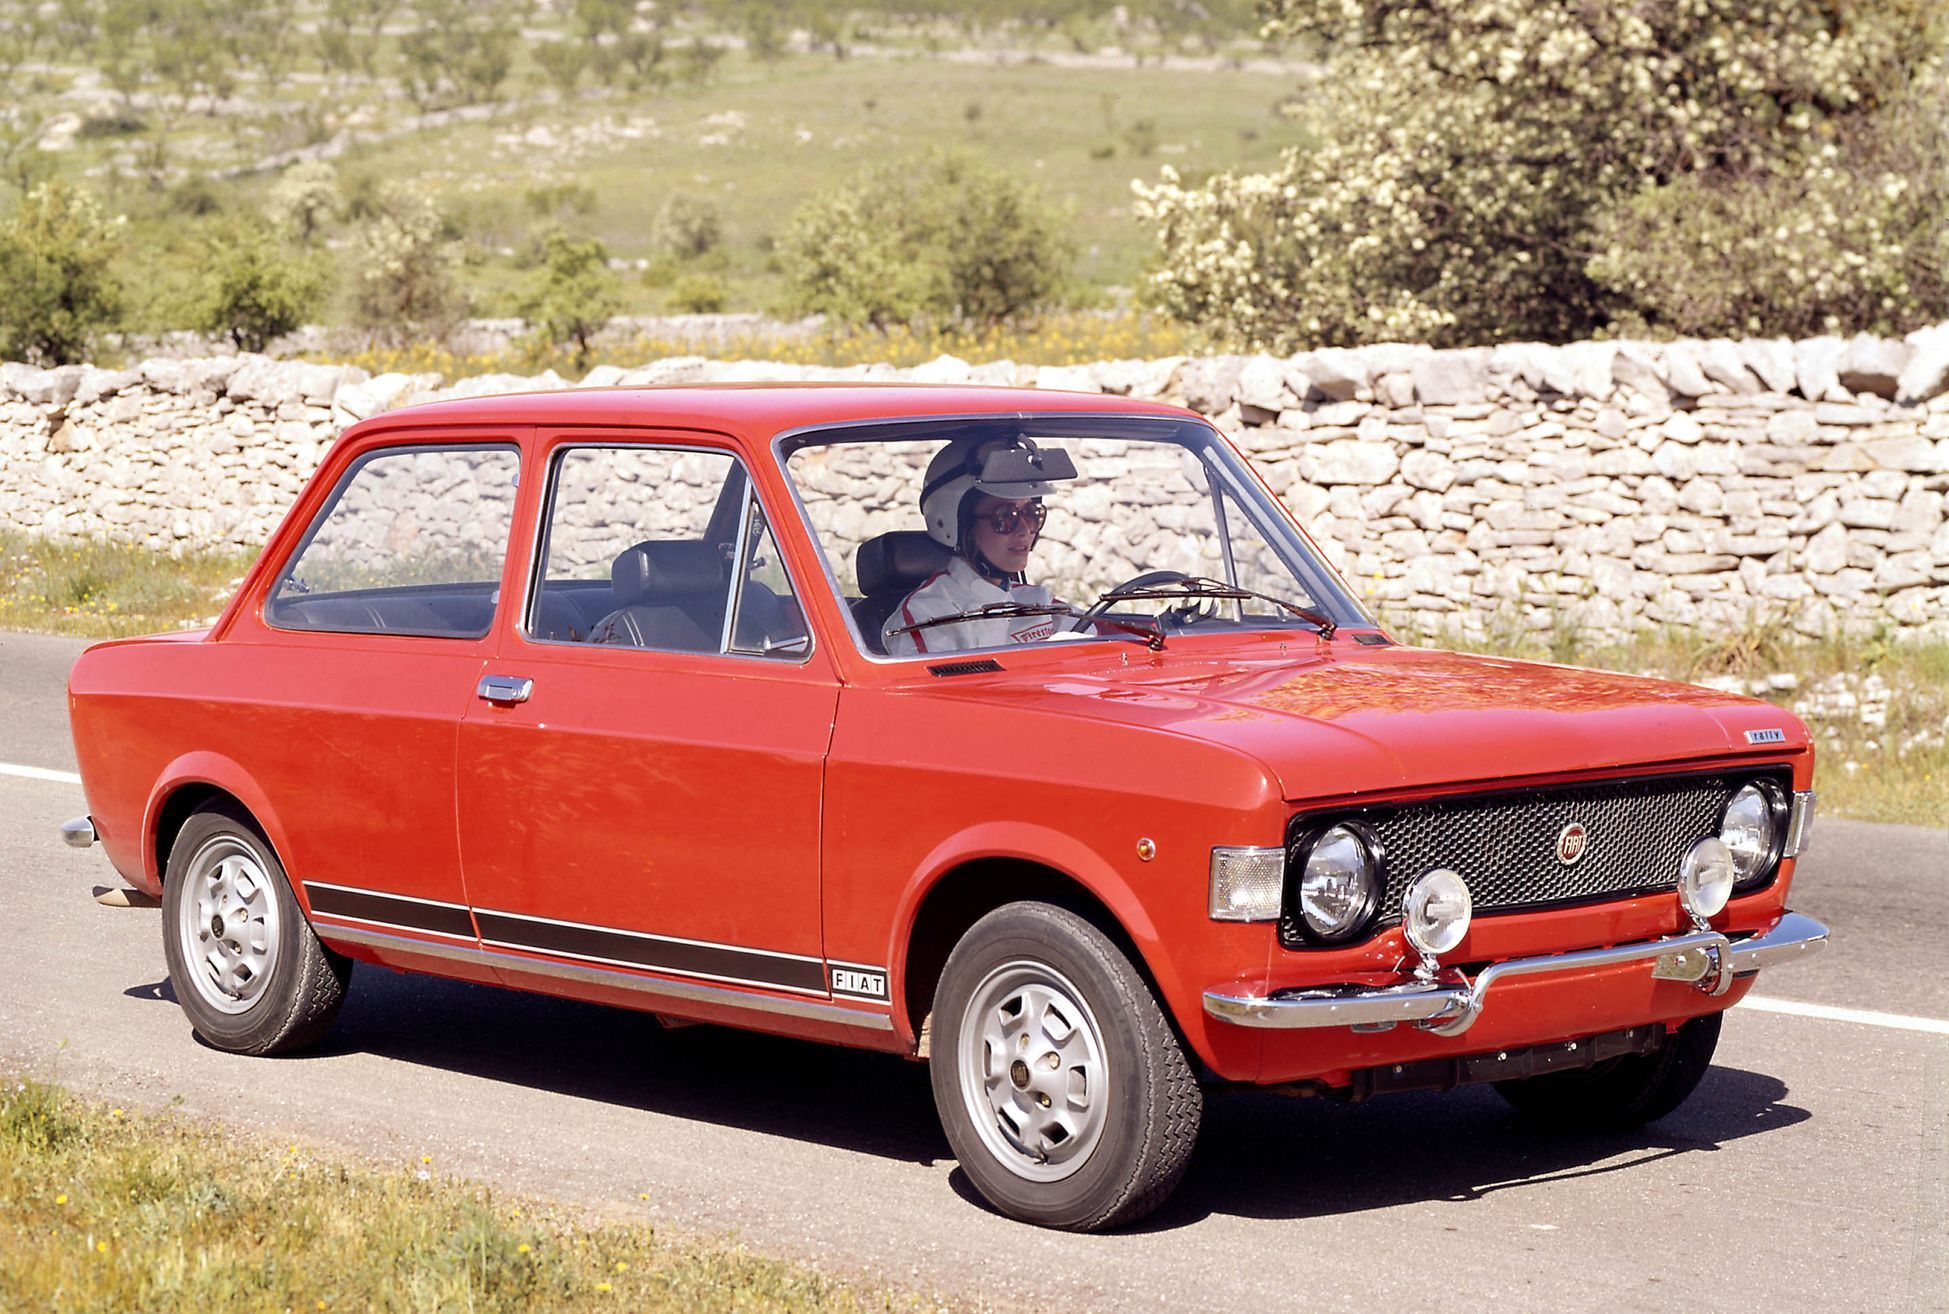 Фиат страна производитель. Фиат 128. Fiat 128 Rally. Fiat 128 1972. Fiat1 1980.